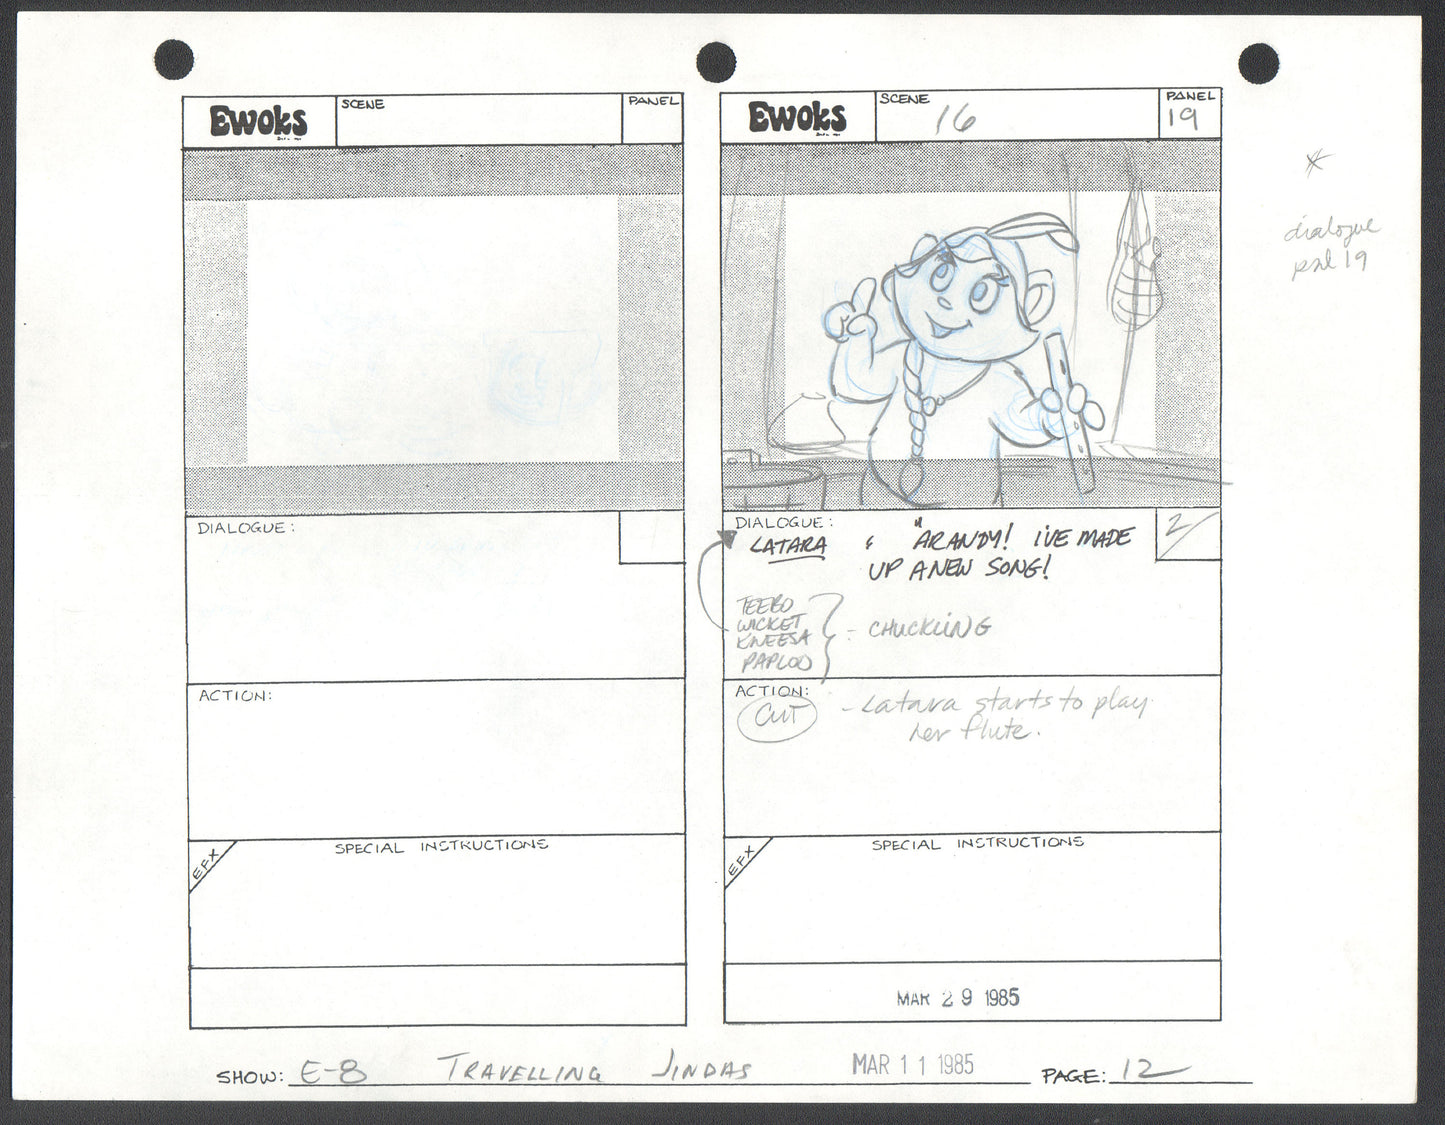 Star Wars: Ewoks season 1985 Original Production Pencil Animation Storyboard 12